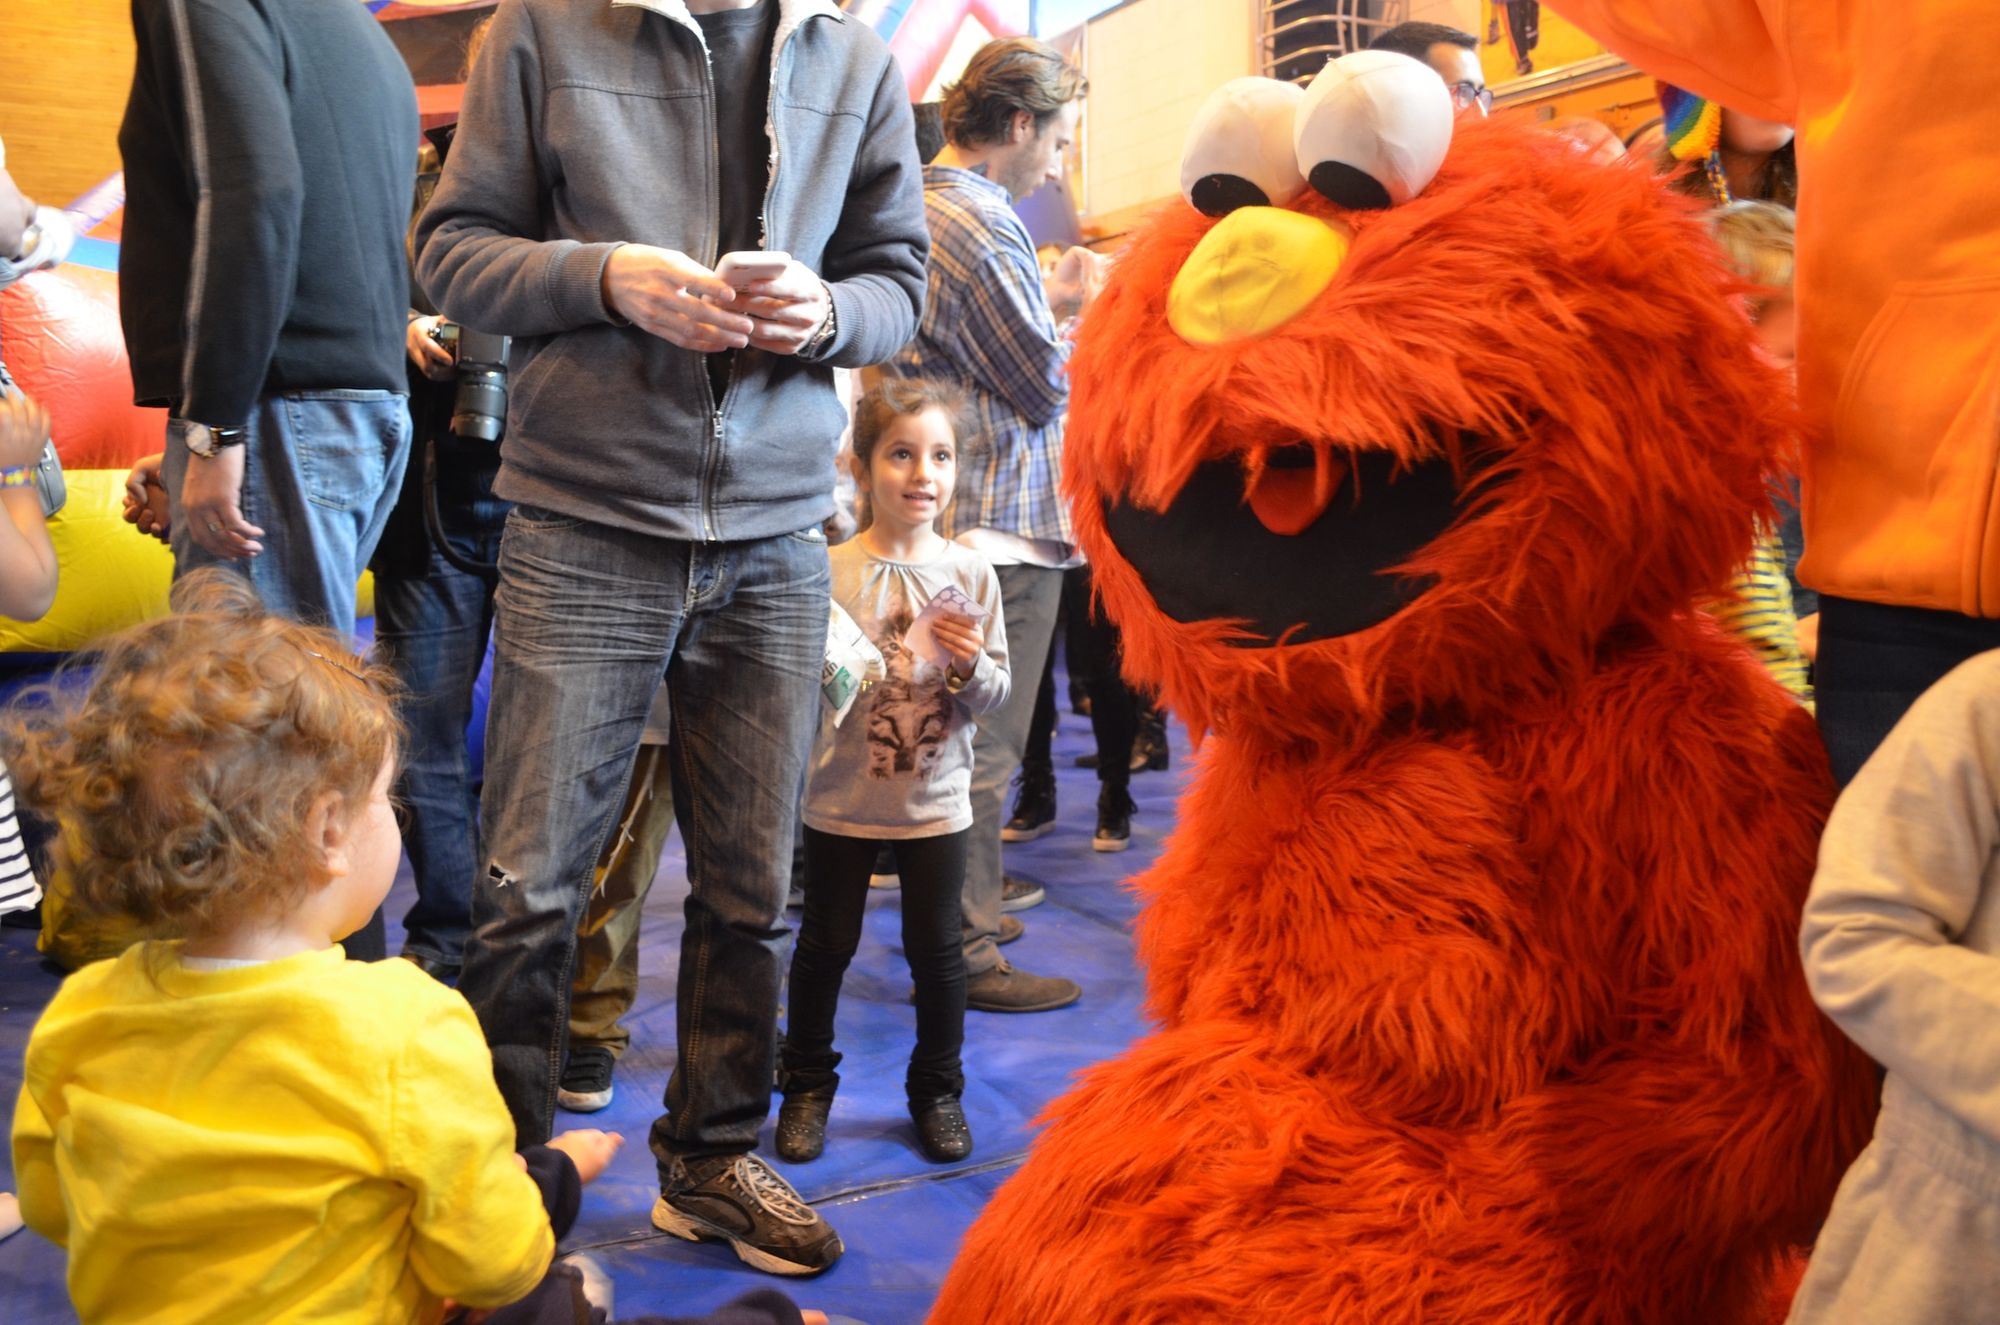 A costumed Elmo brings joy to the kids. 